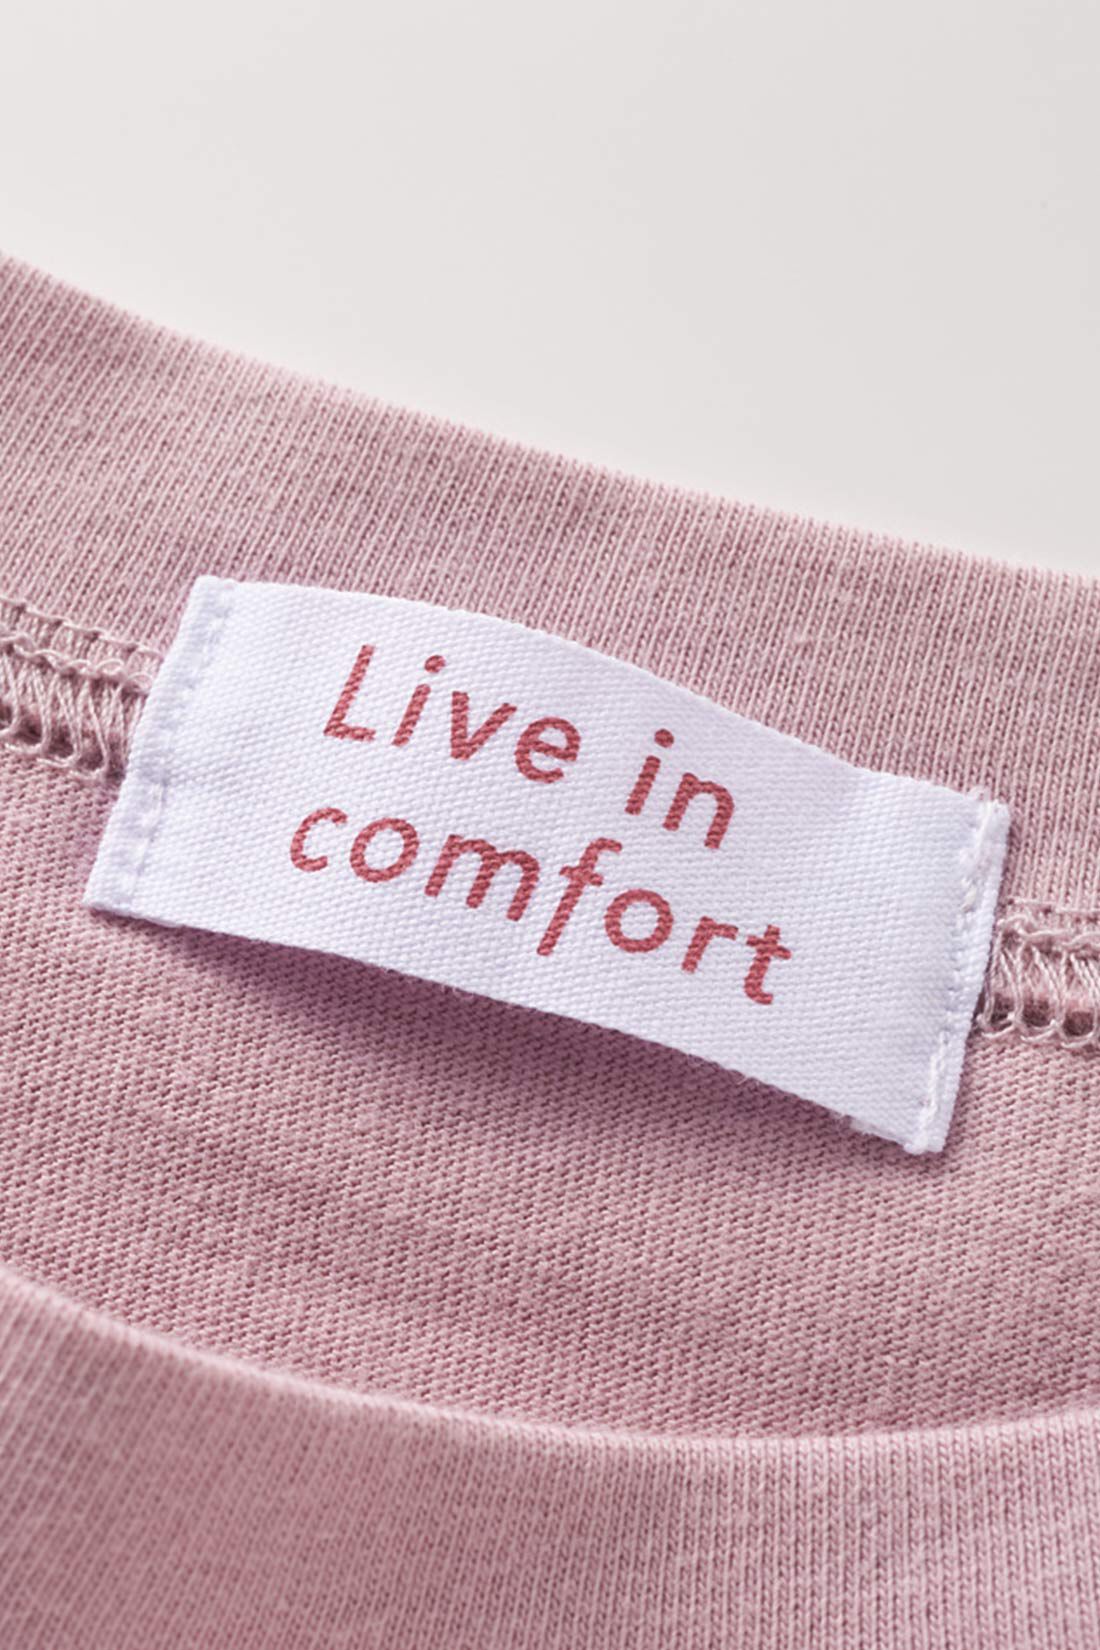 Live in  comfort|リブ イン コンフォート　ピンクリボン　地中海の風を受けて育った　トルコオーガニックコットン　ピンクTシャツの会|ピンクリボン商品のブランドネームにはかわいいピンク色を使用。